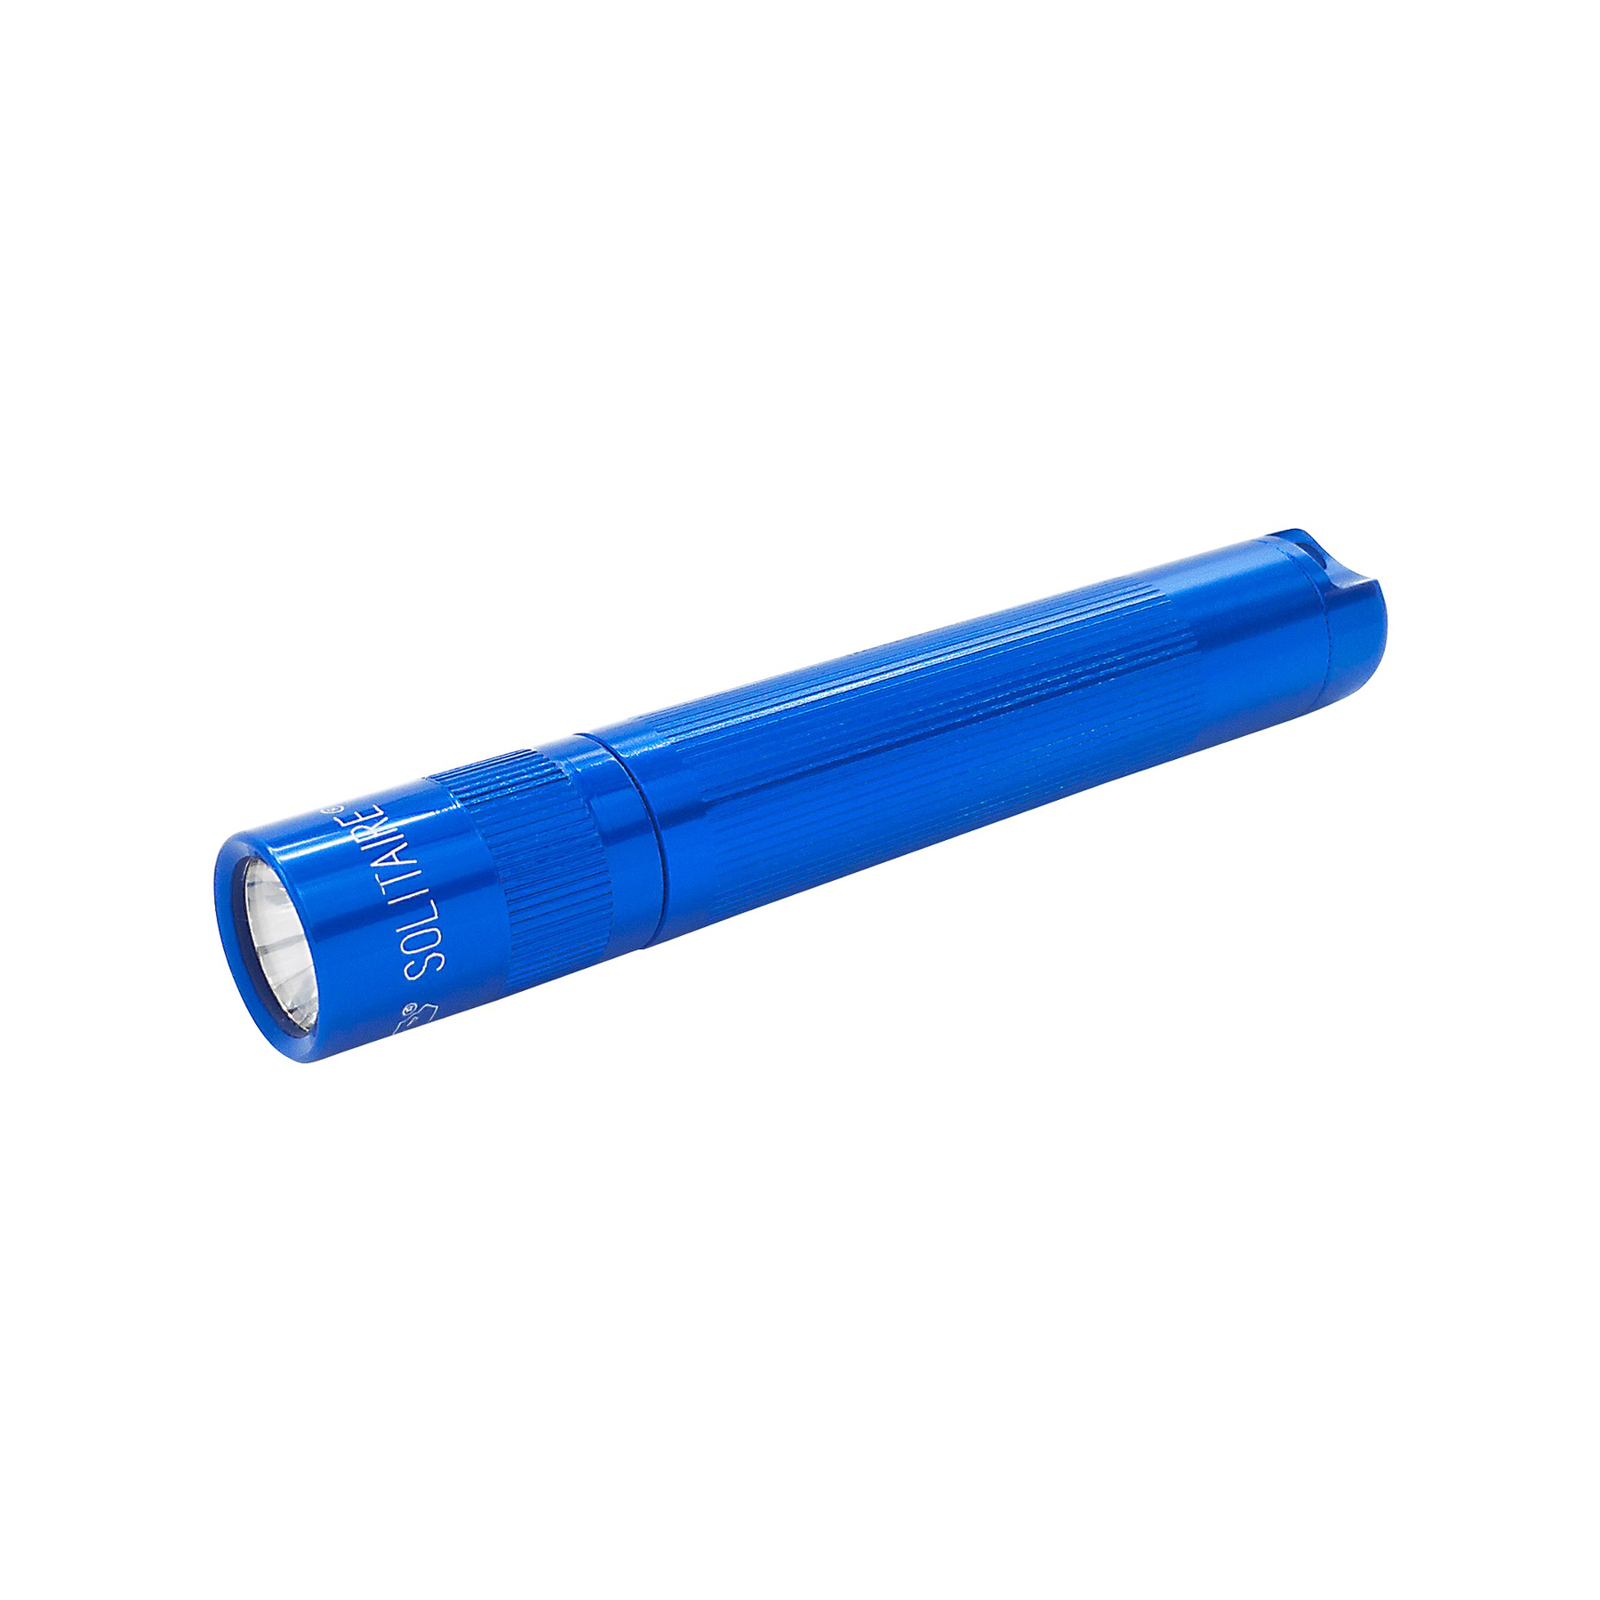 Maglite Lampe de poche au xénon Solitaire 1-Cell AAA bleu